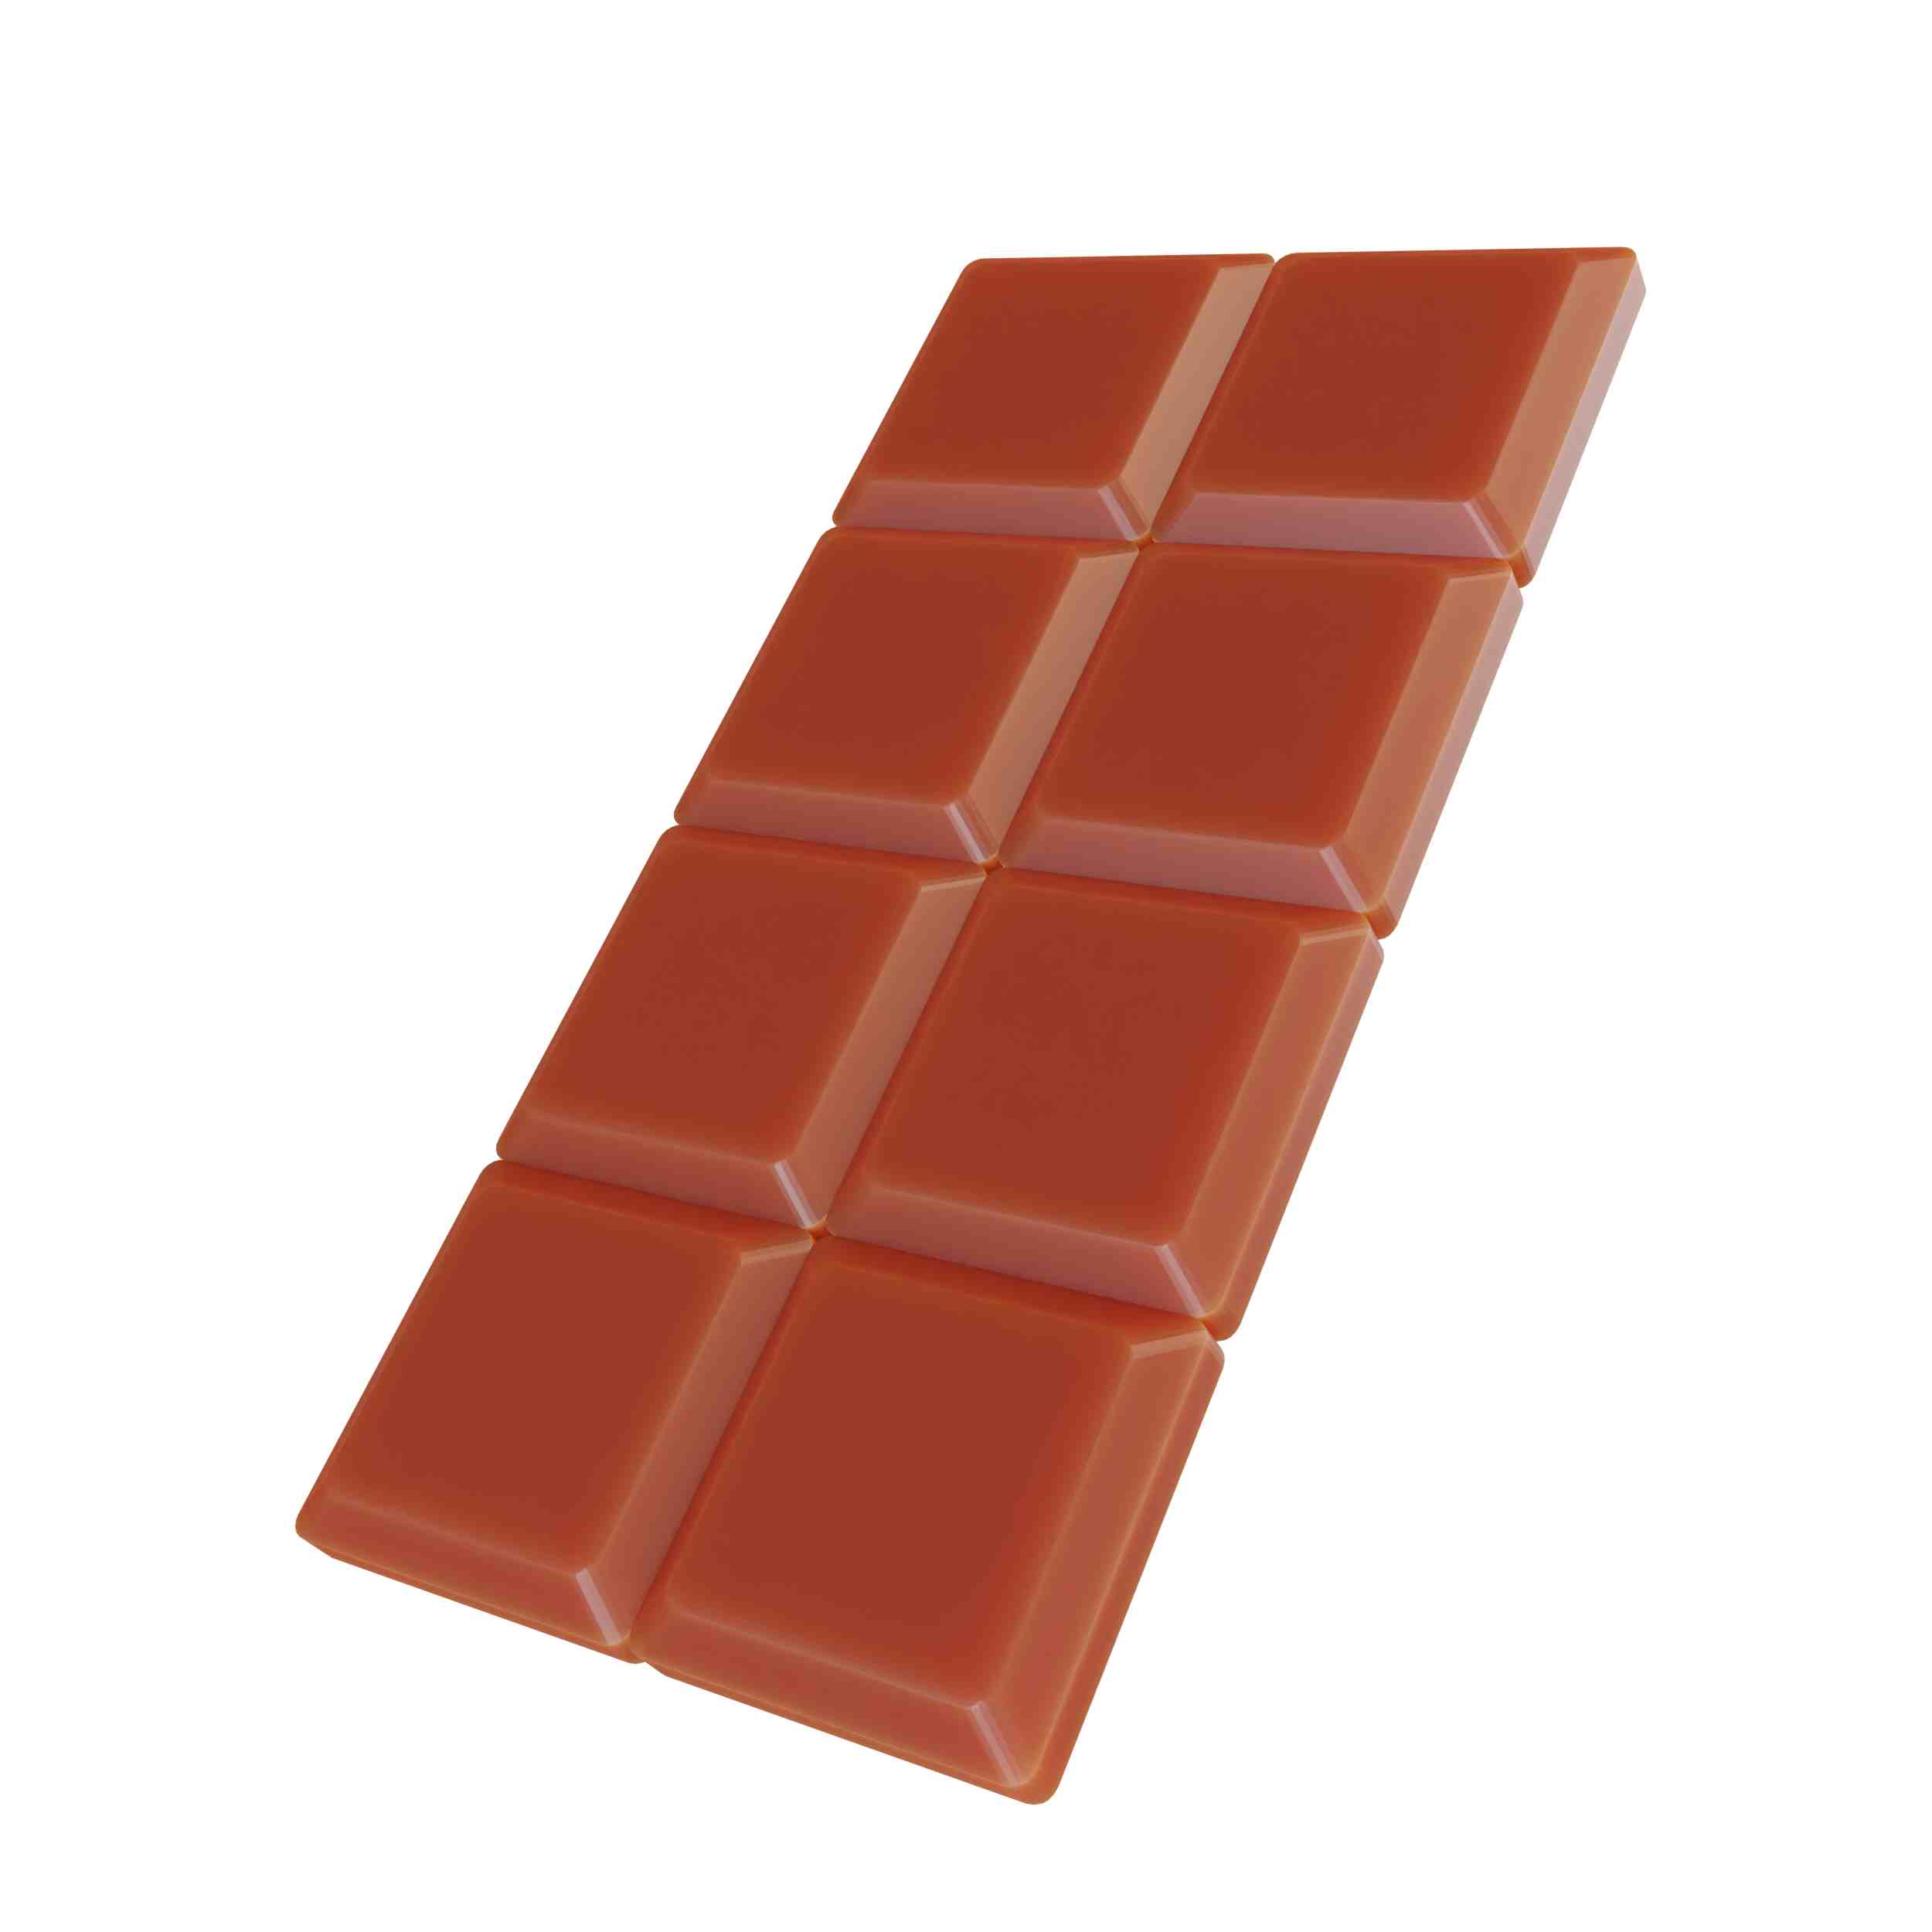 Chocolate Bar 3d Model